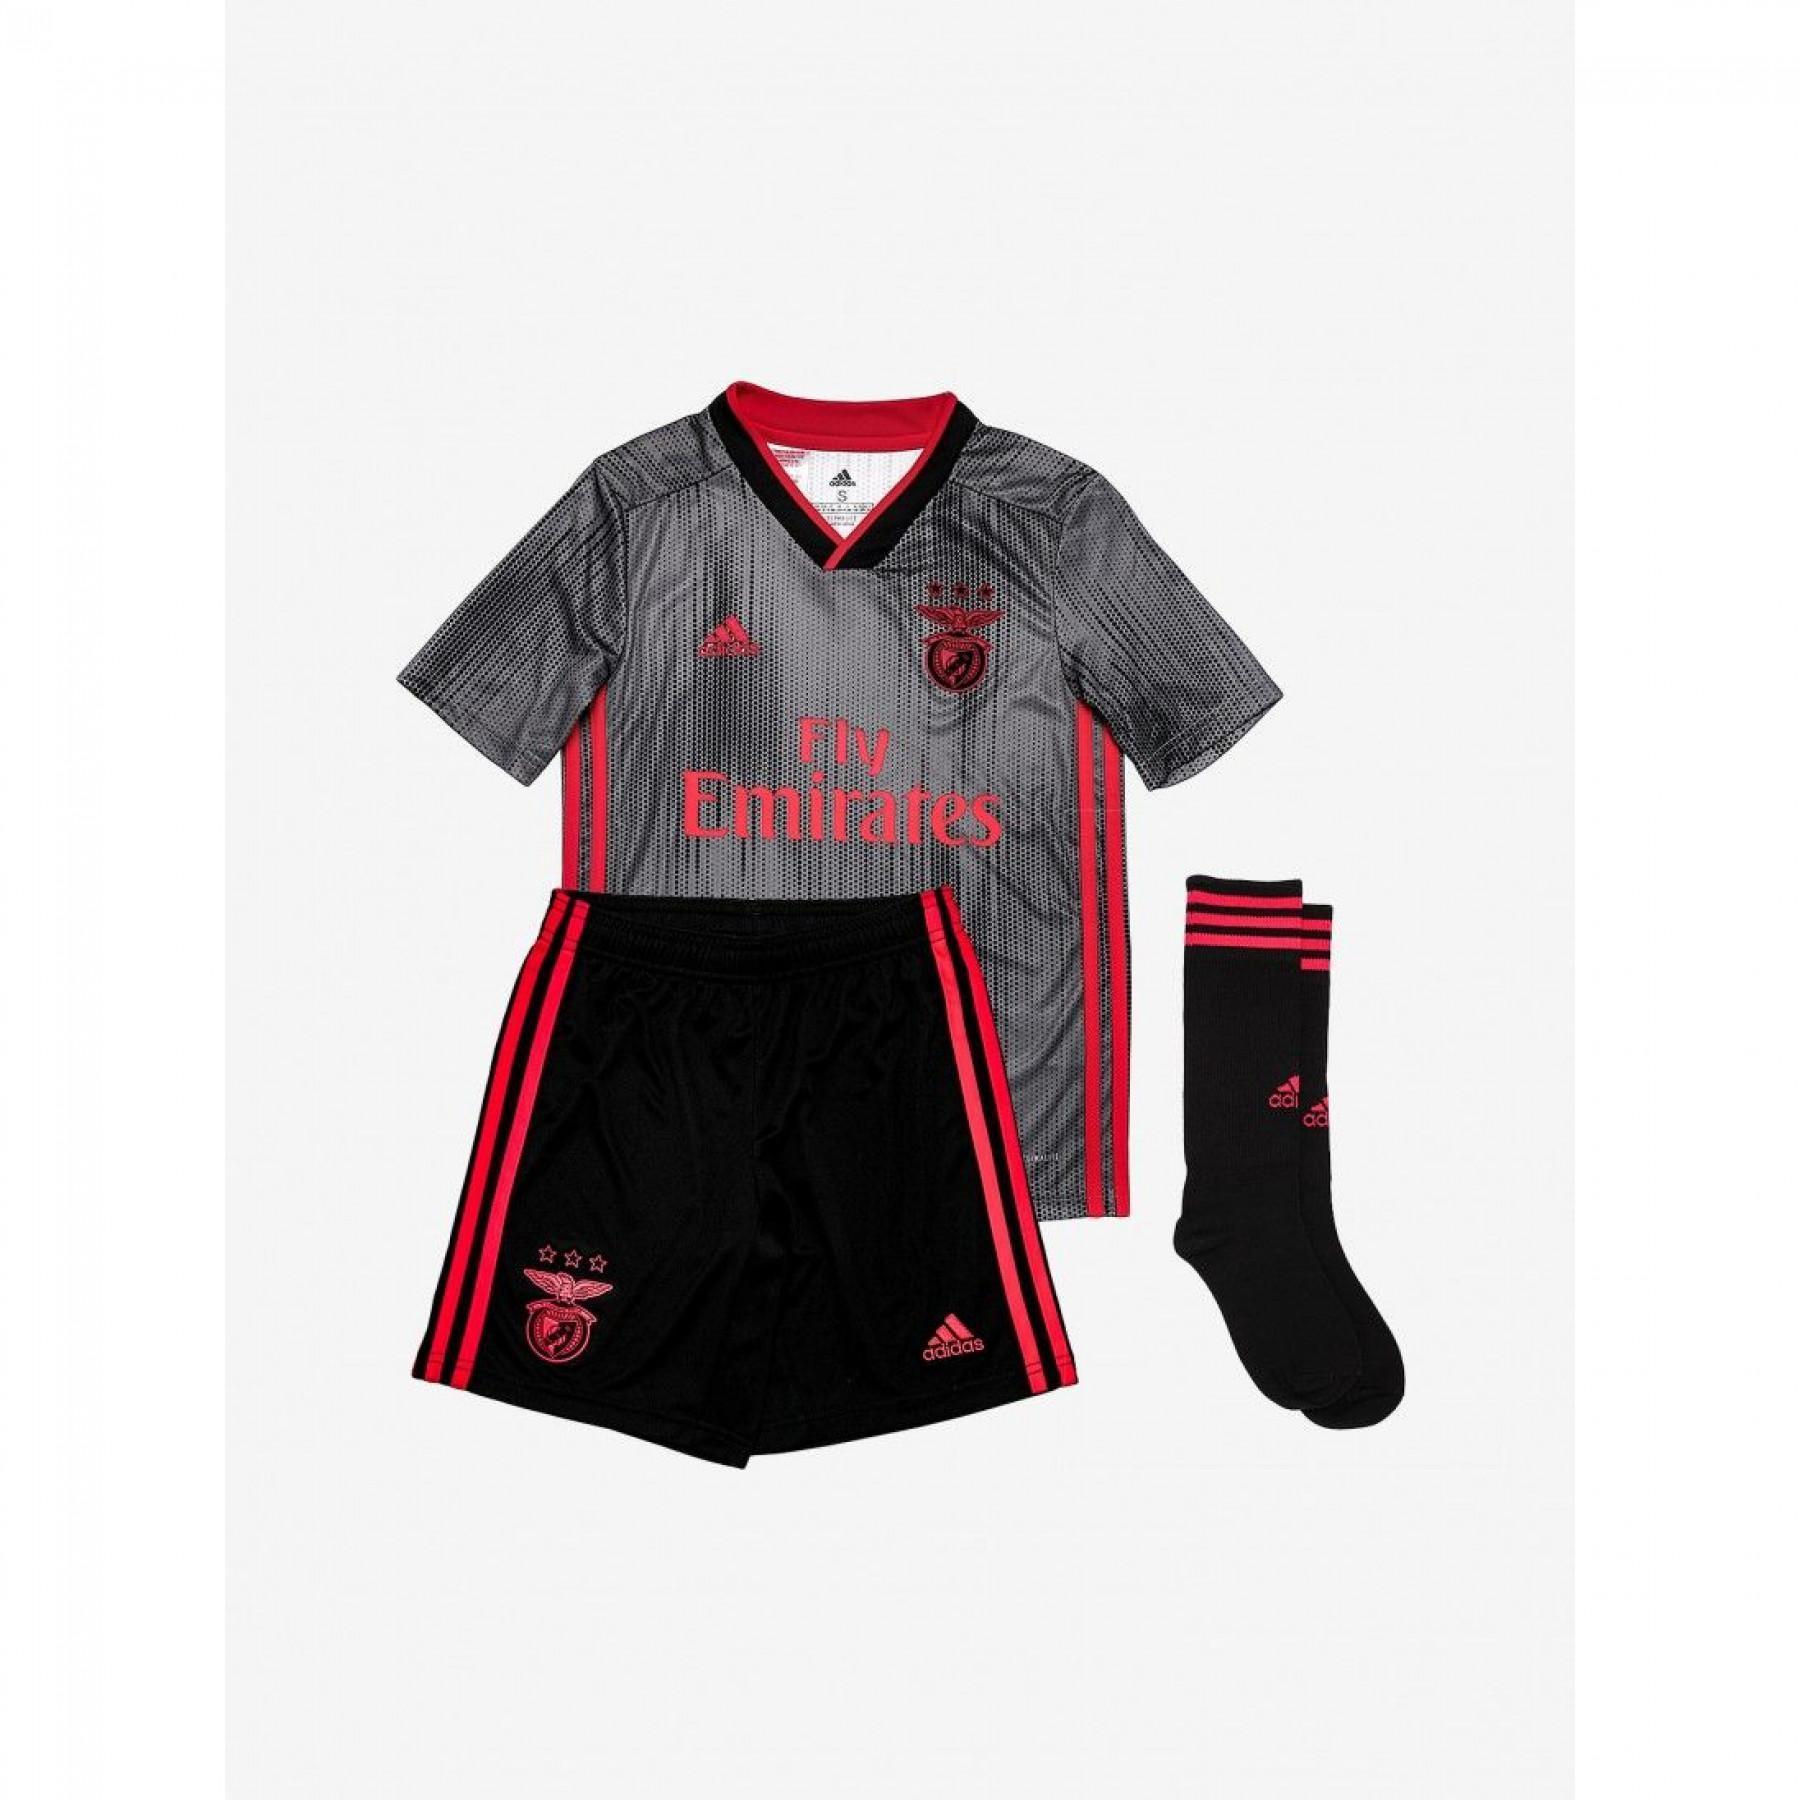 Mini-kit exterior Benfica Lisbonne 2019/20